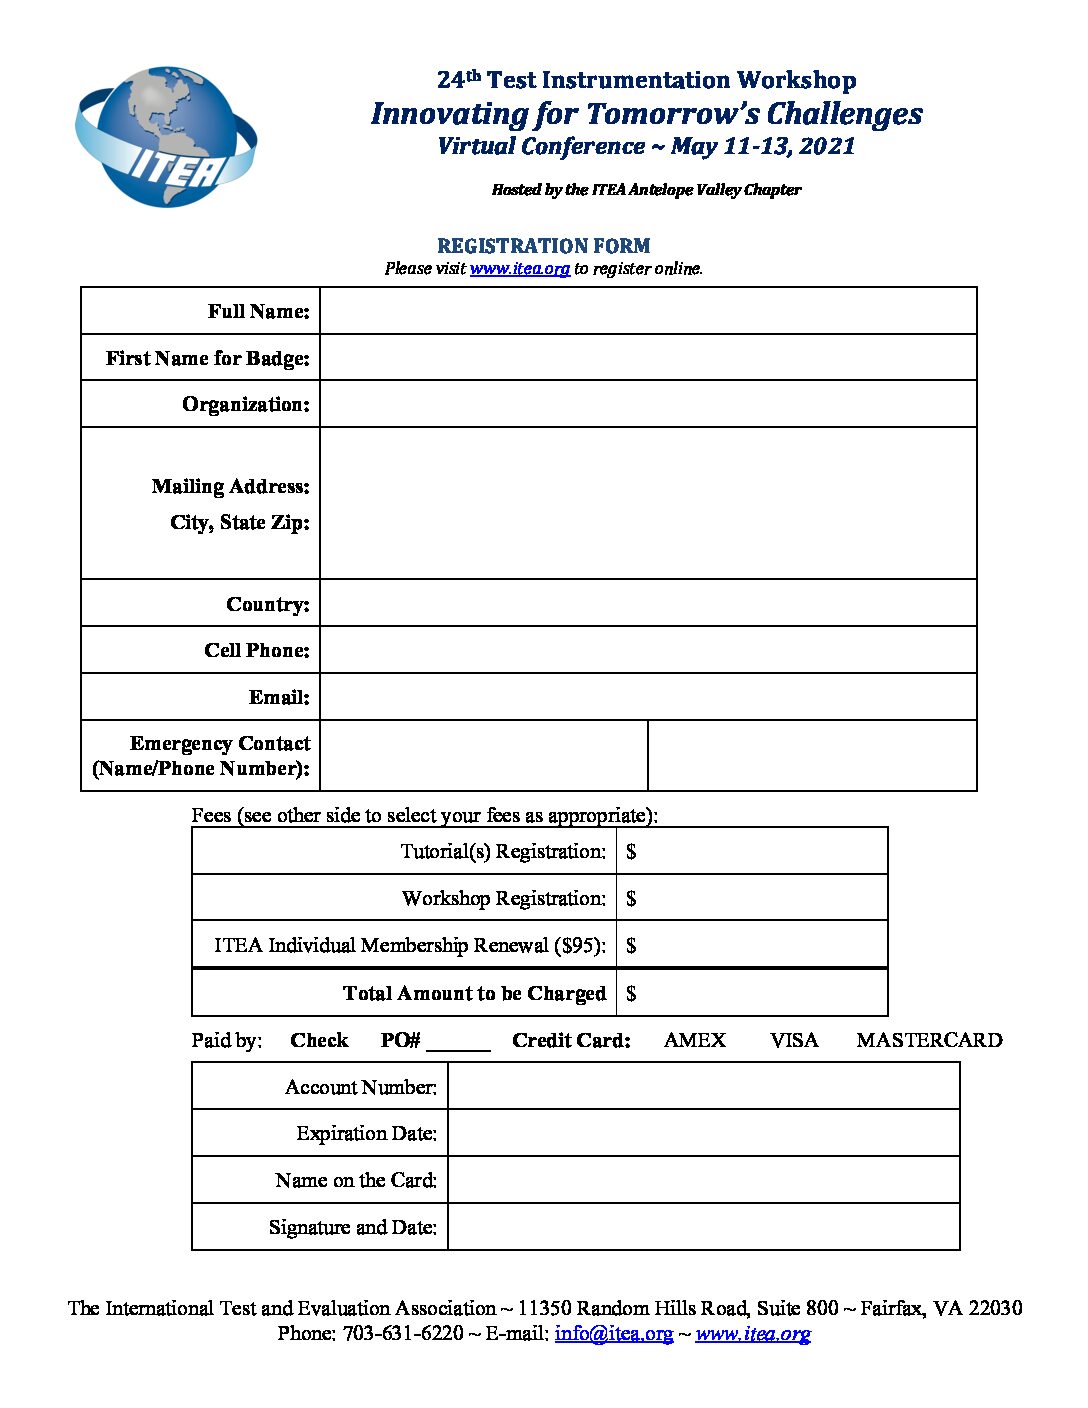 2021 TIW Registration Form_new rates